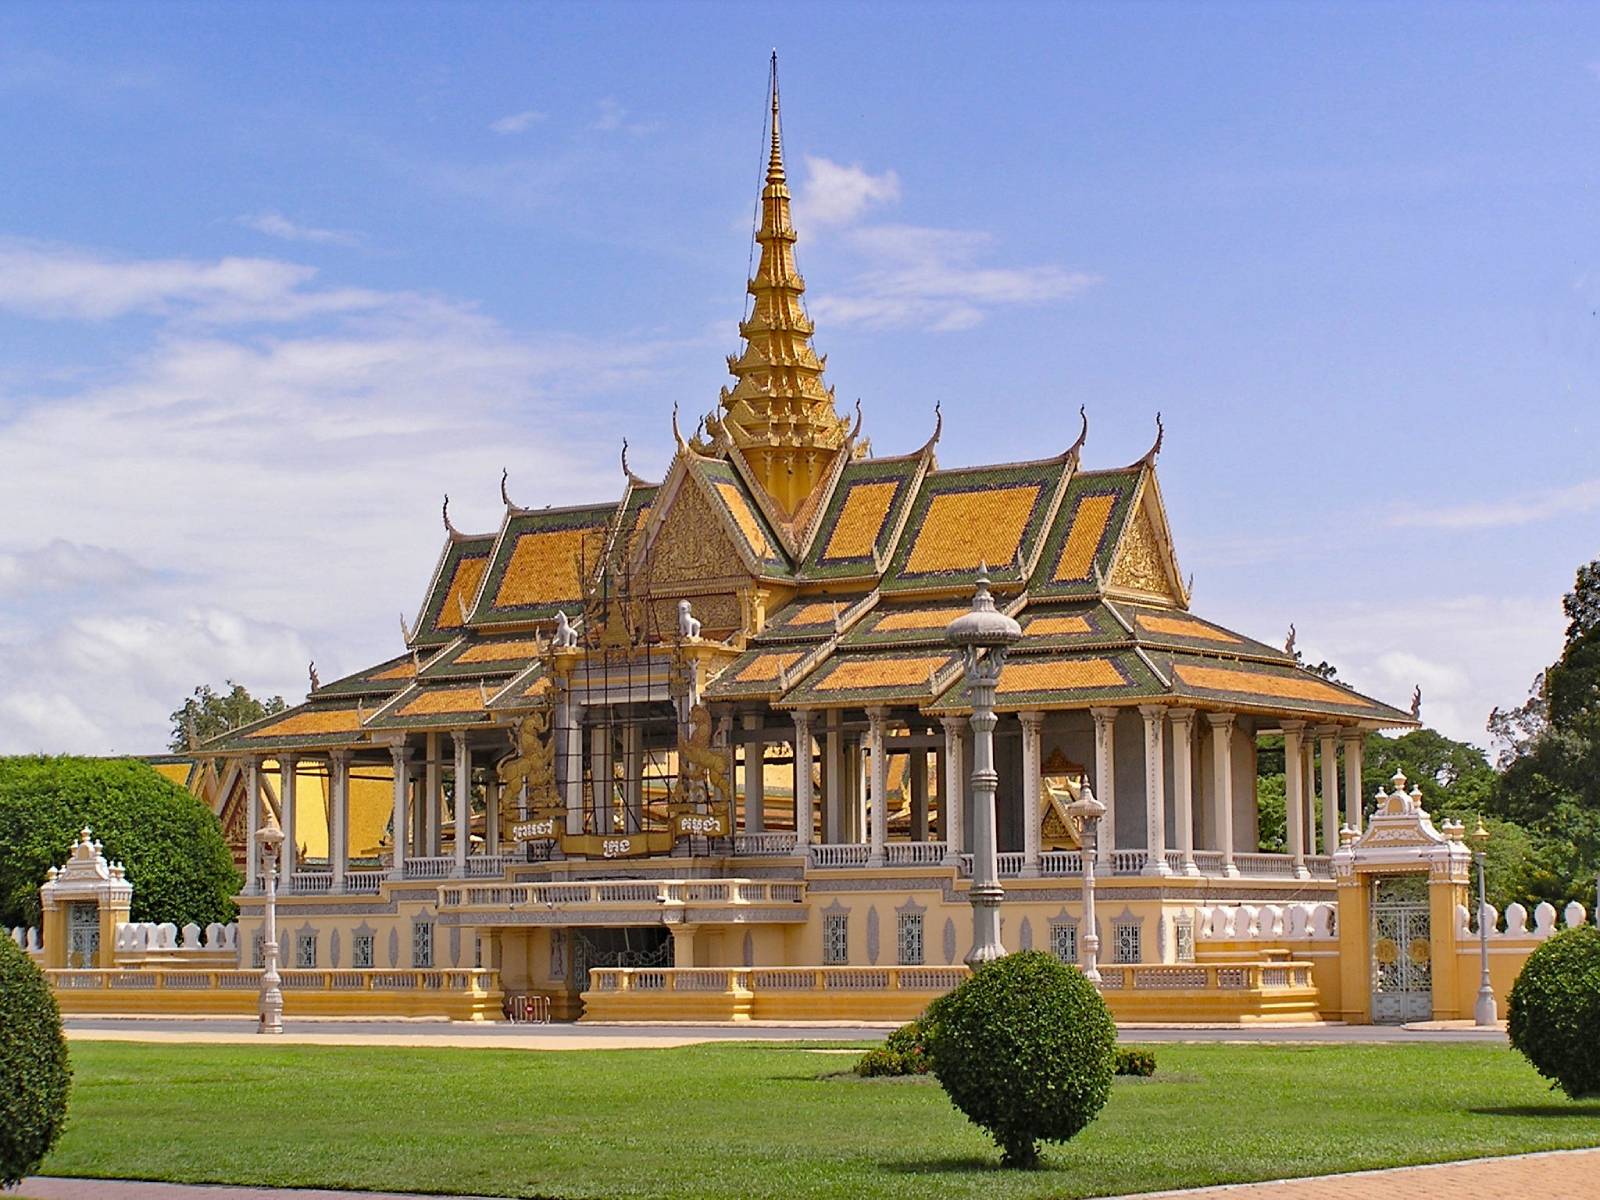 The Royal Palace in Phnom Penh, Cambodia